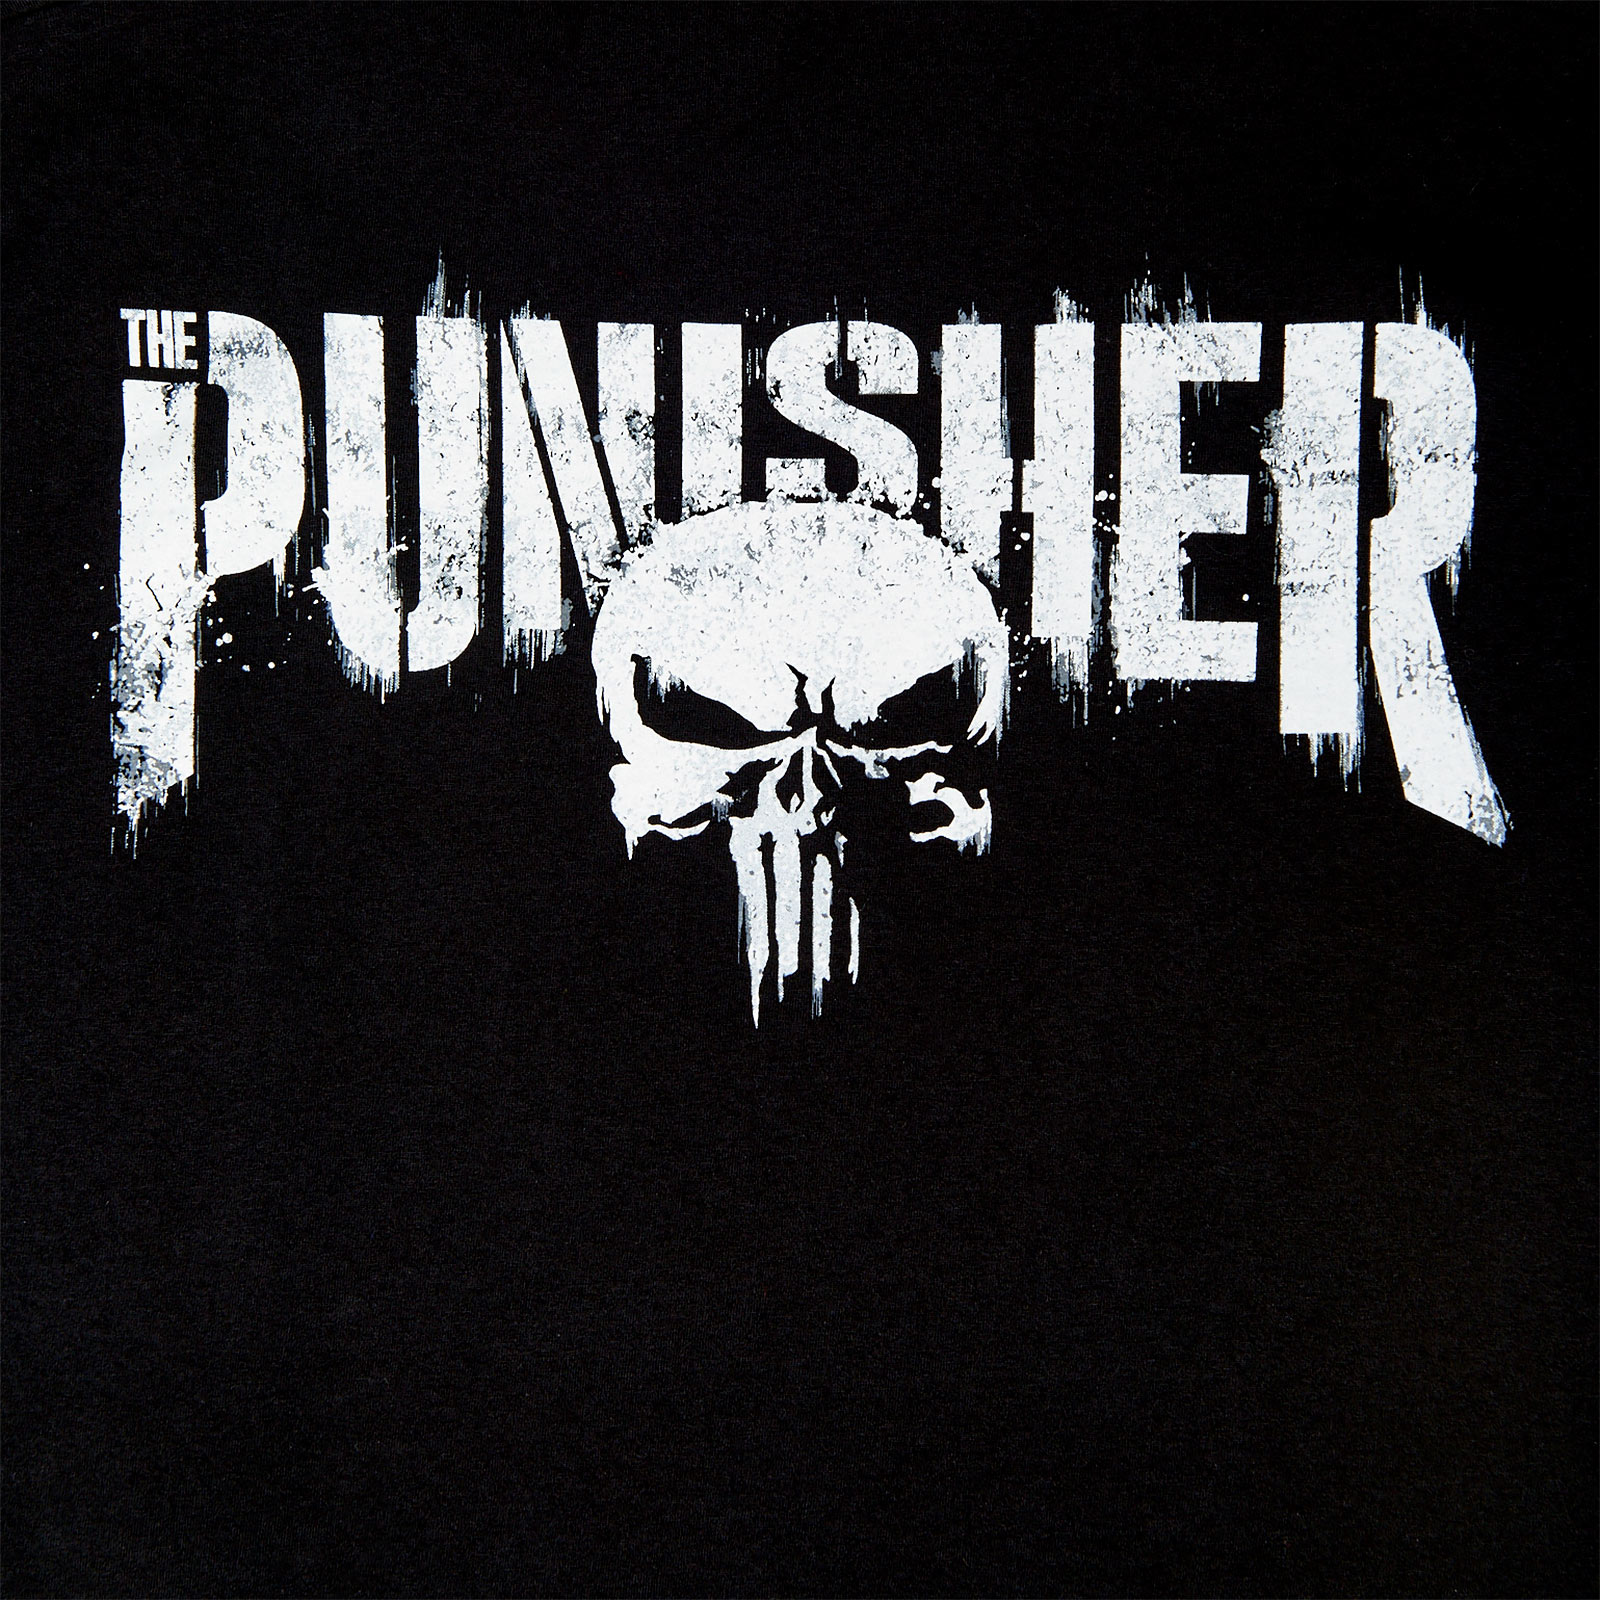 Punisher - The Truth T-Shirt zwart